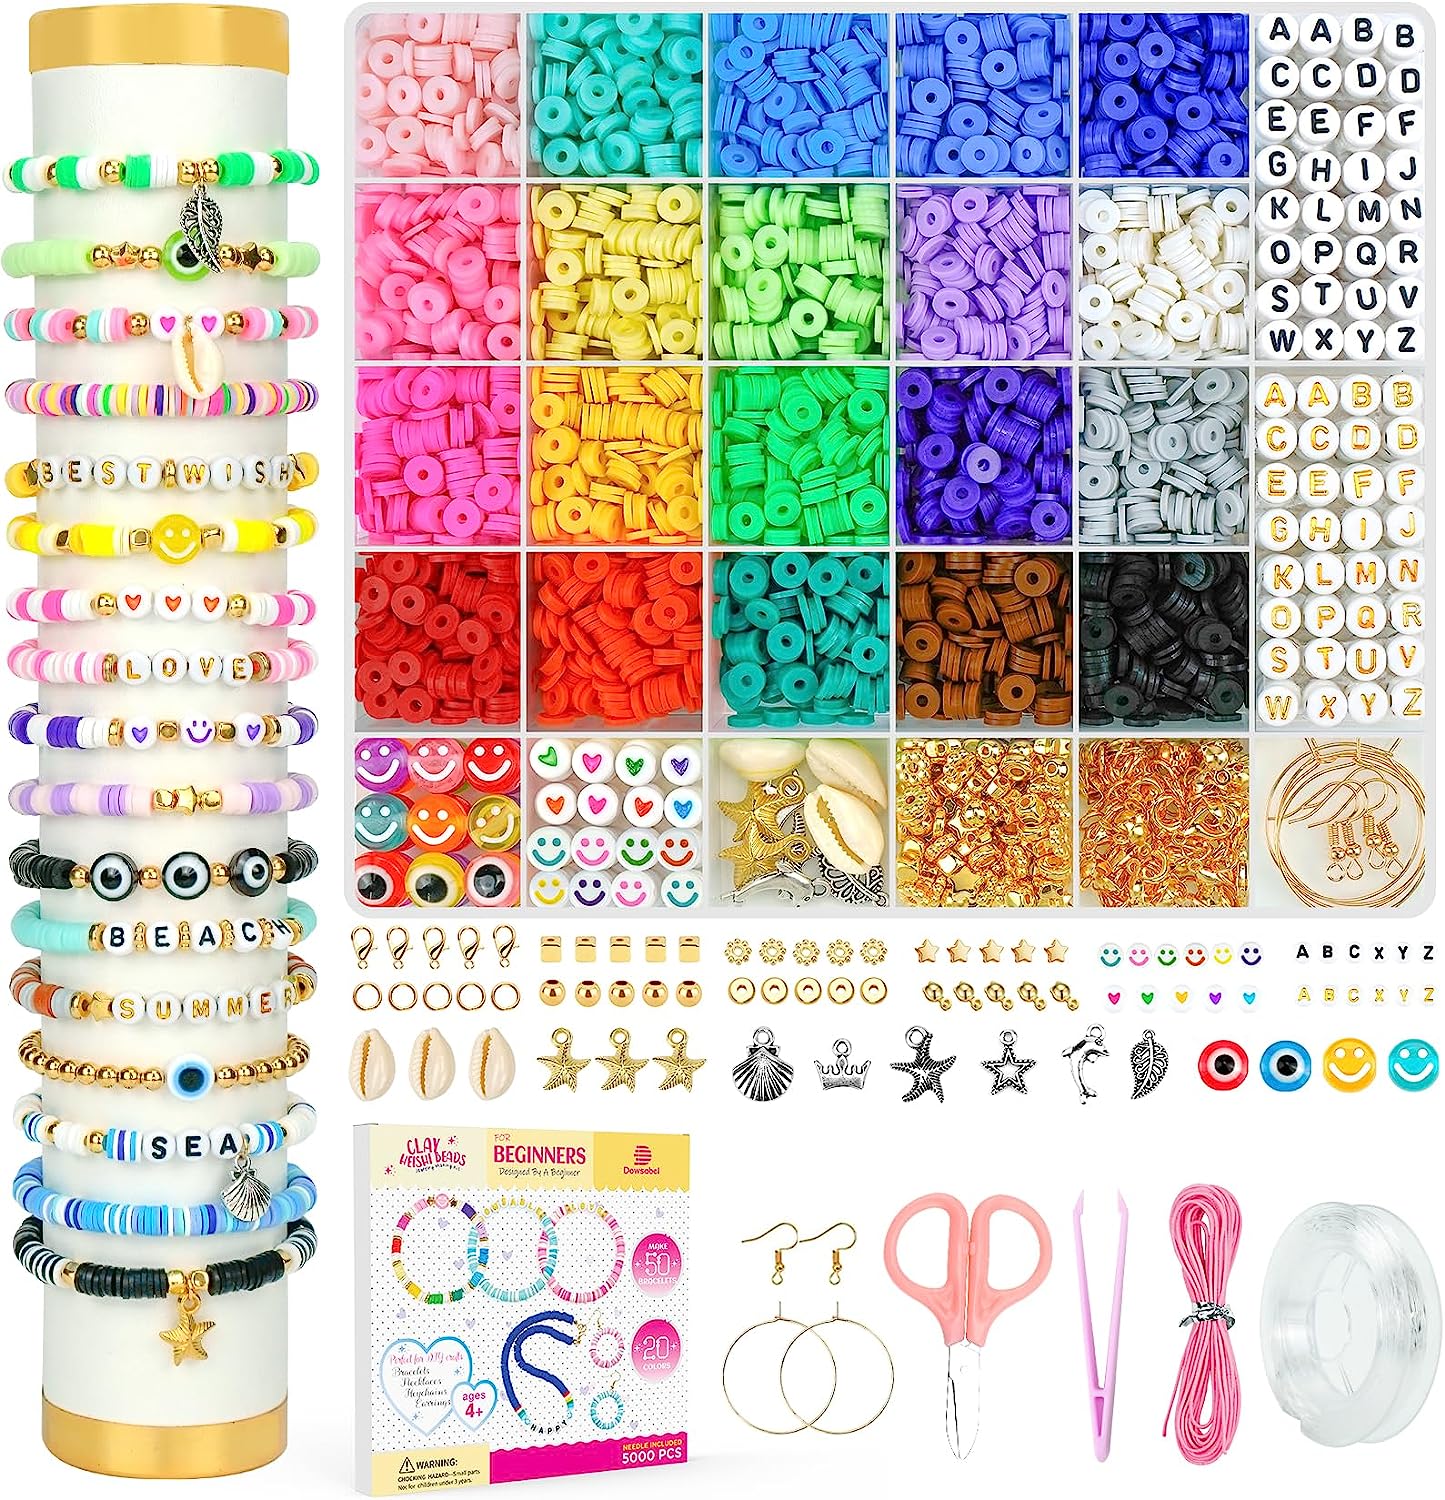 LIS HEGENSA 1300 Pcs DIY Childrens Crafts Beads Friendship